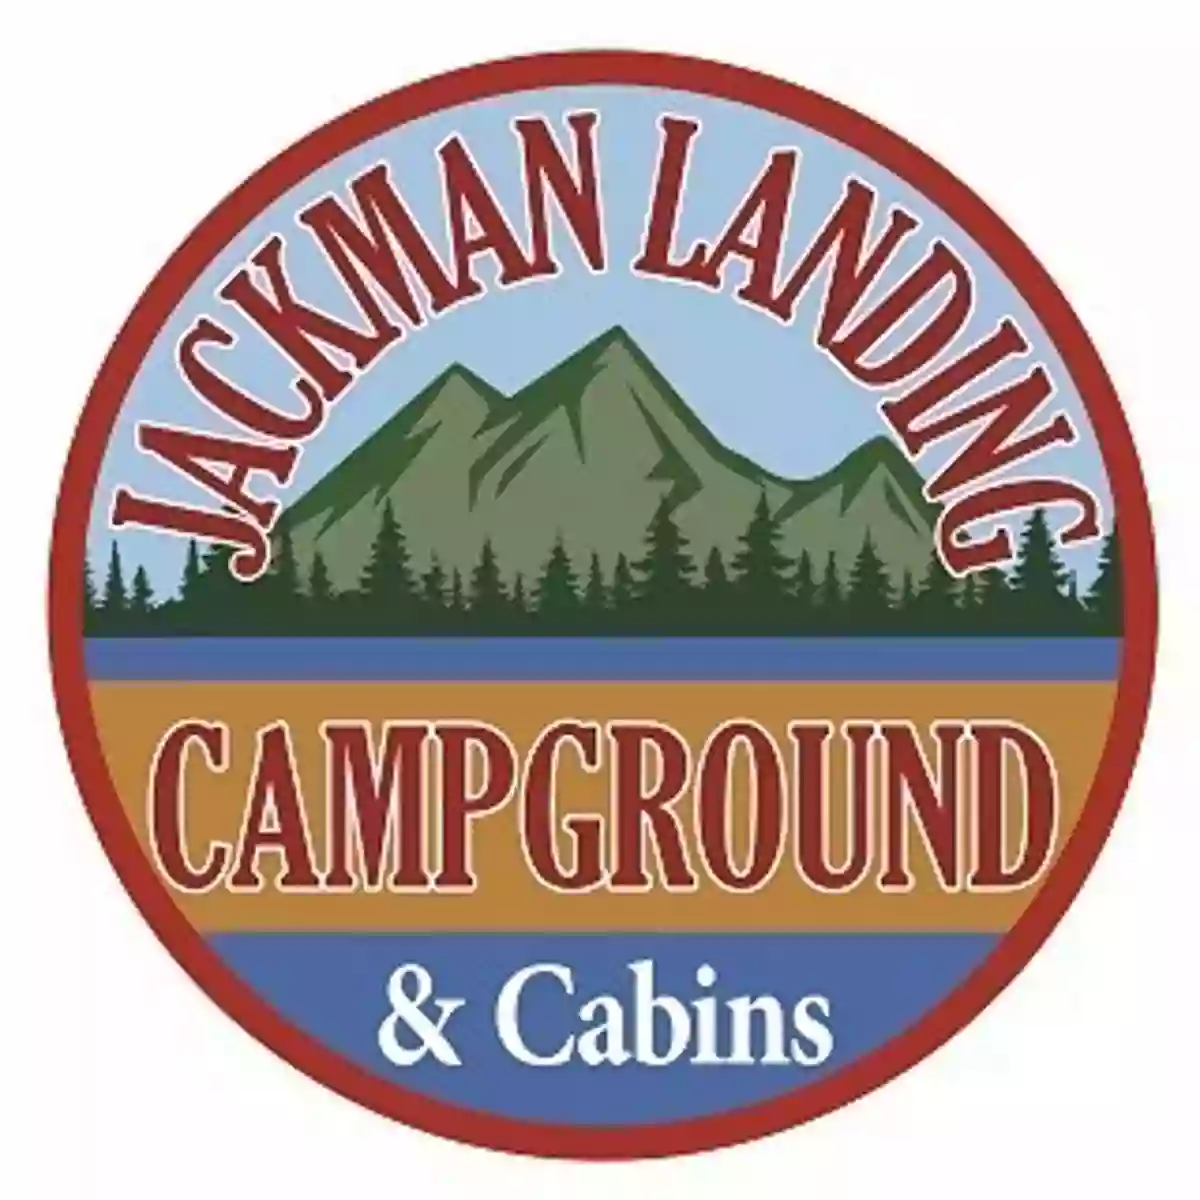 Jackman Landing Campground & Cabins